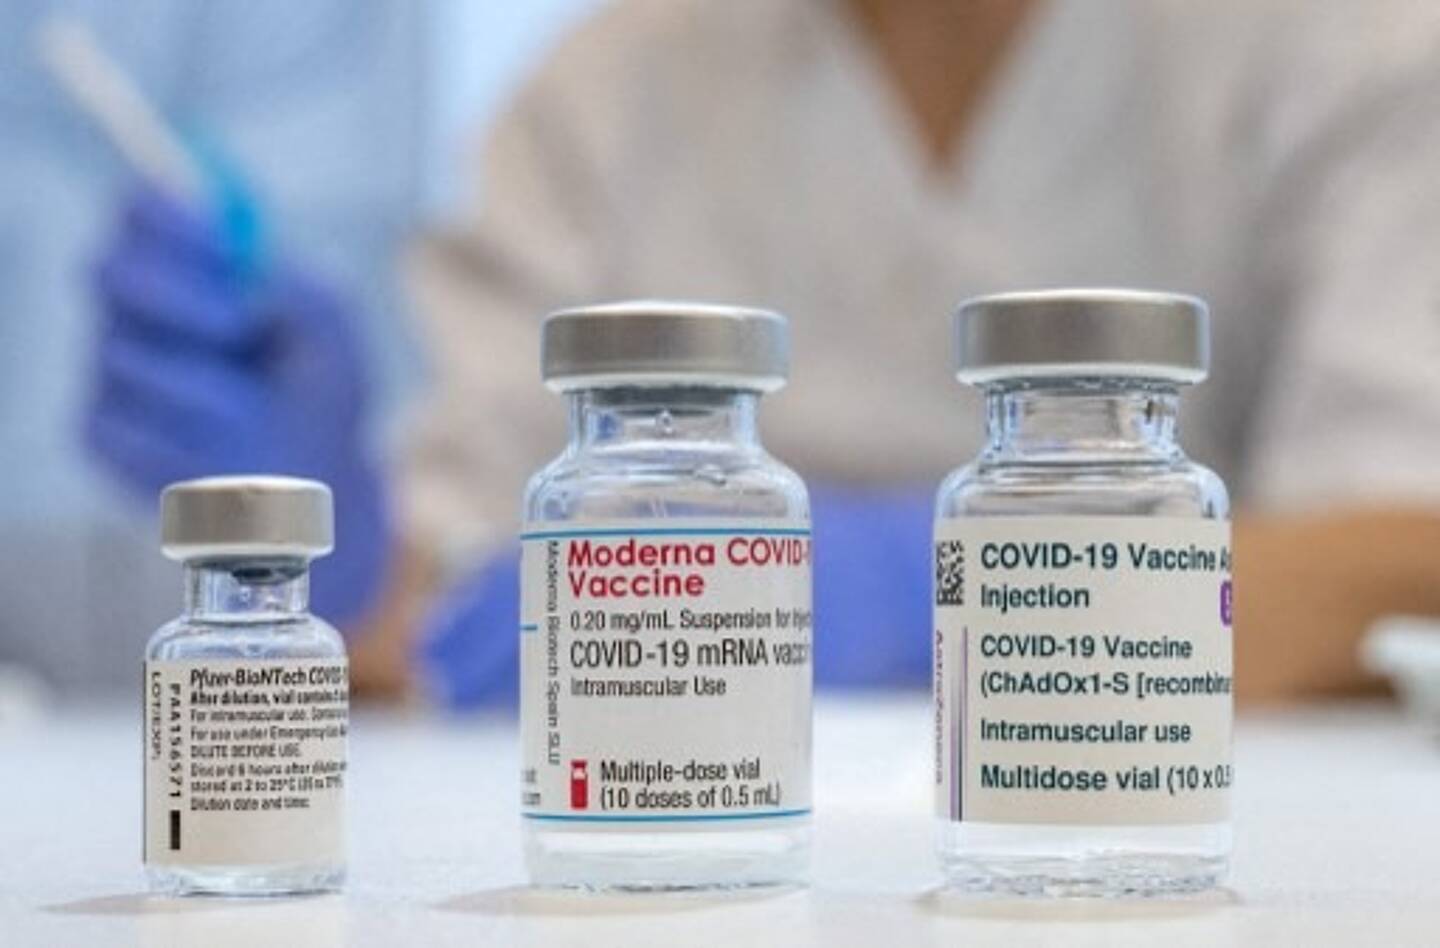 Illustration des vaccins contre la Covid-19